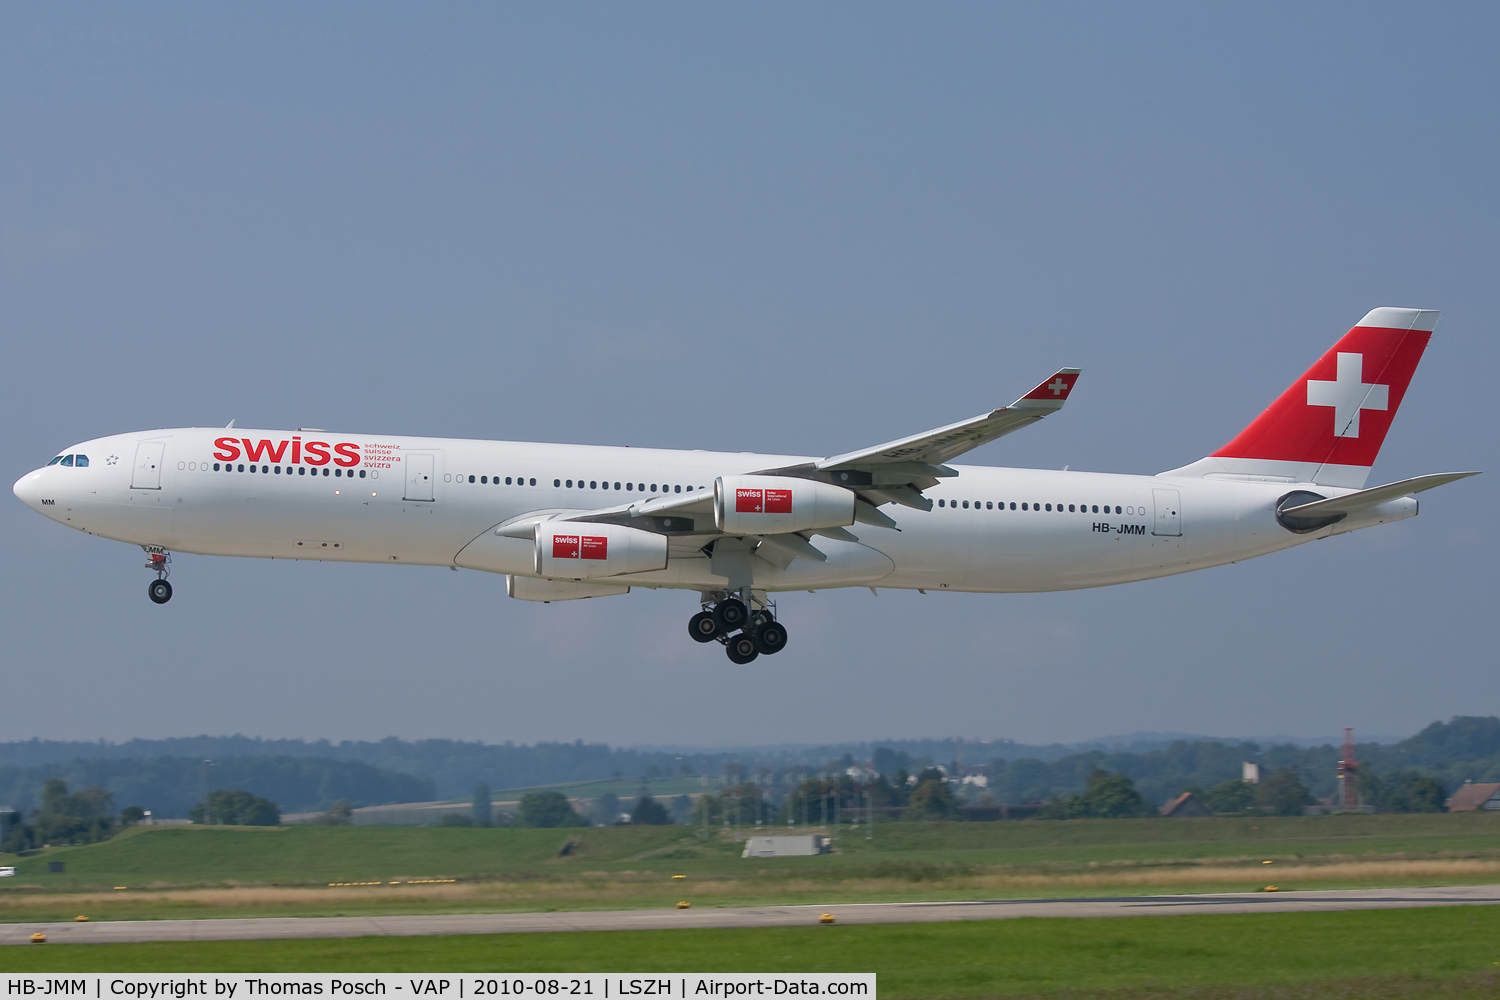 HB-JMM, 1996 Airbus A340-313 C/N 154, Swiss International Airlines